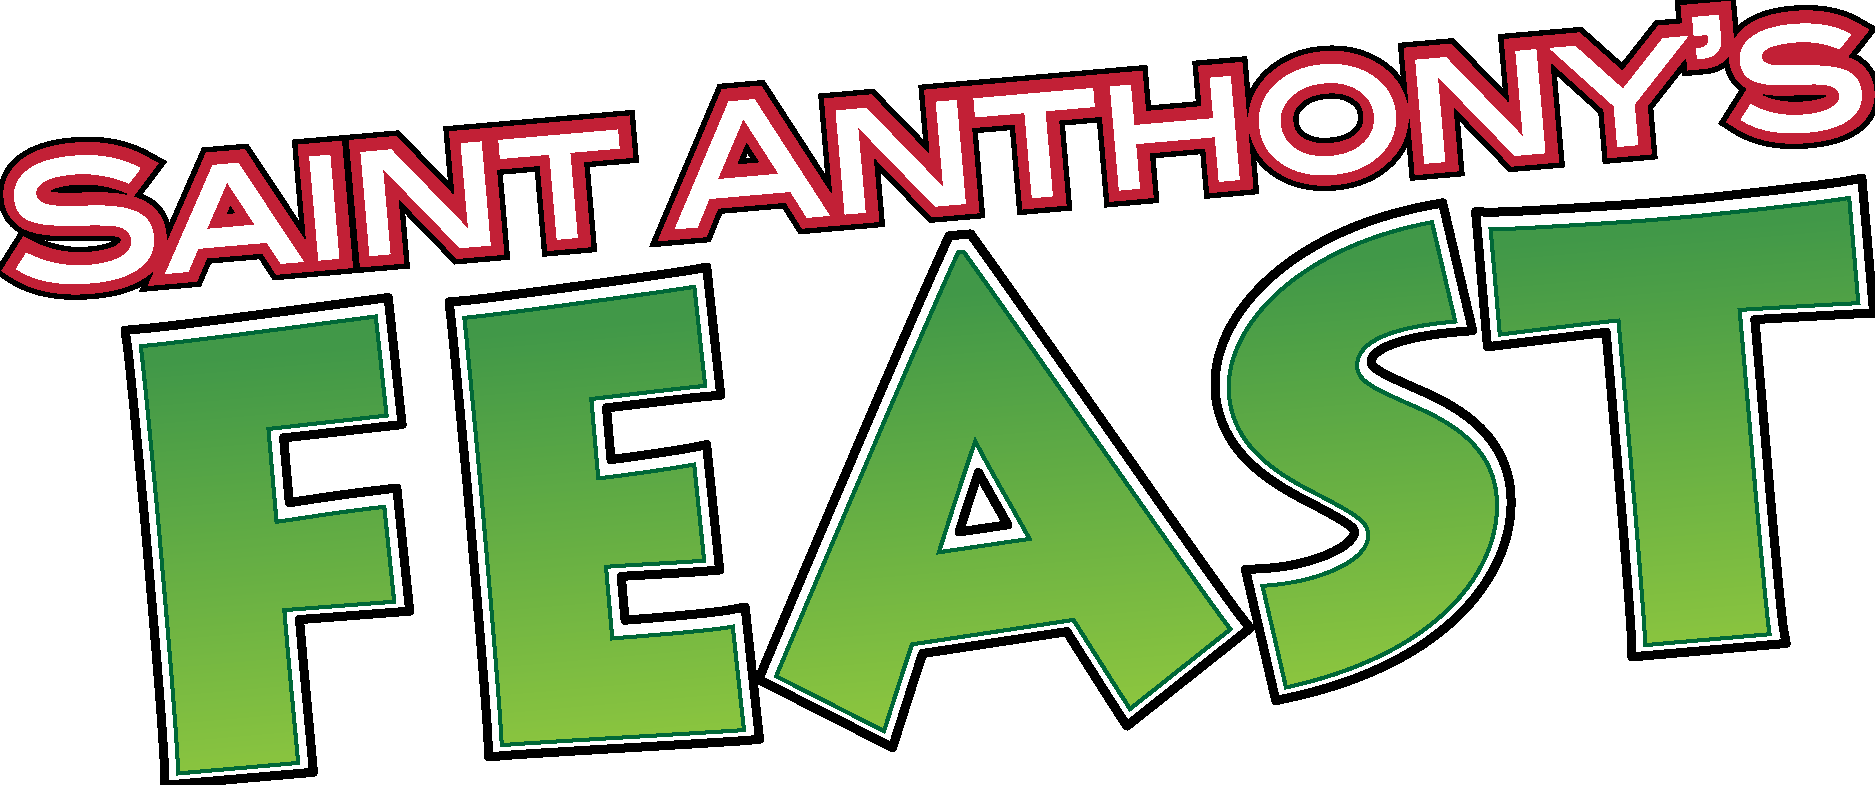 Saint Anthony’s Feast Logo Vector